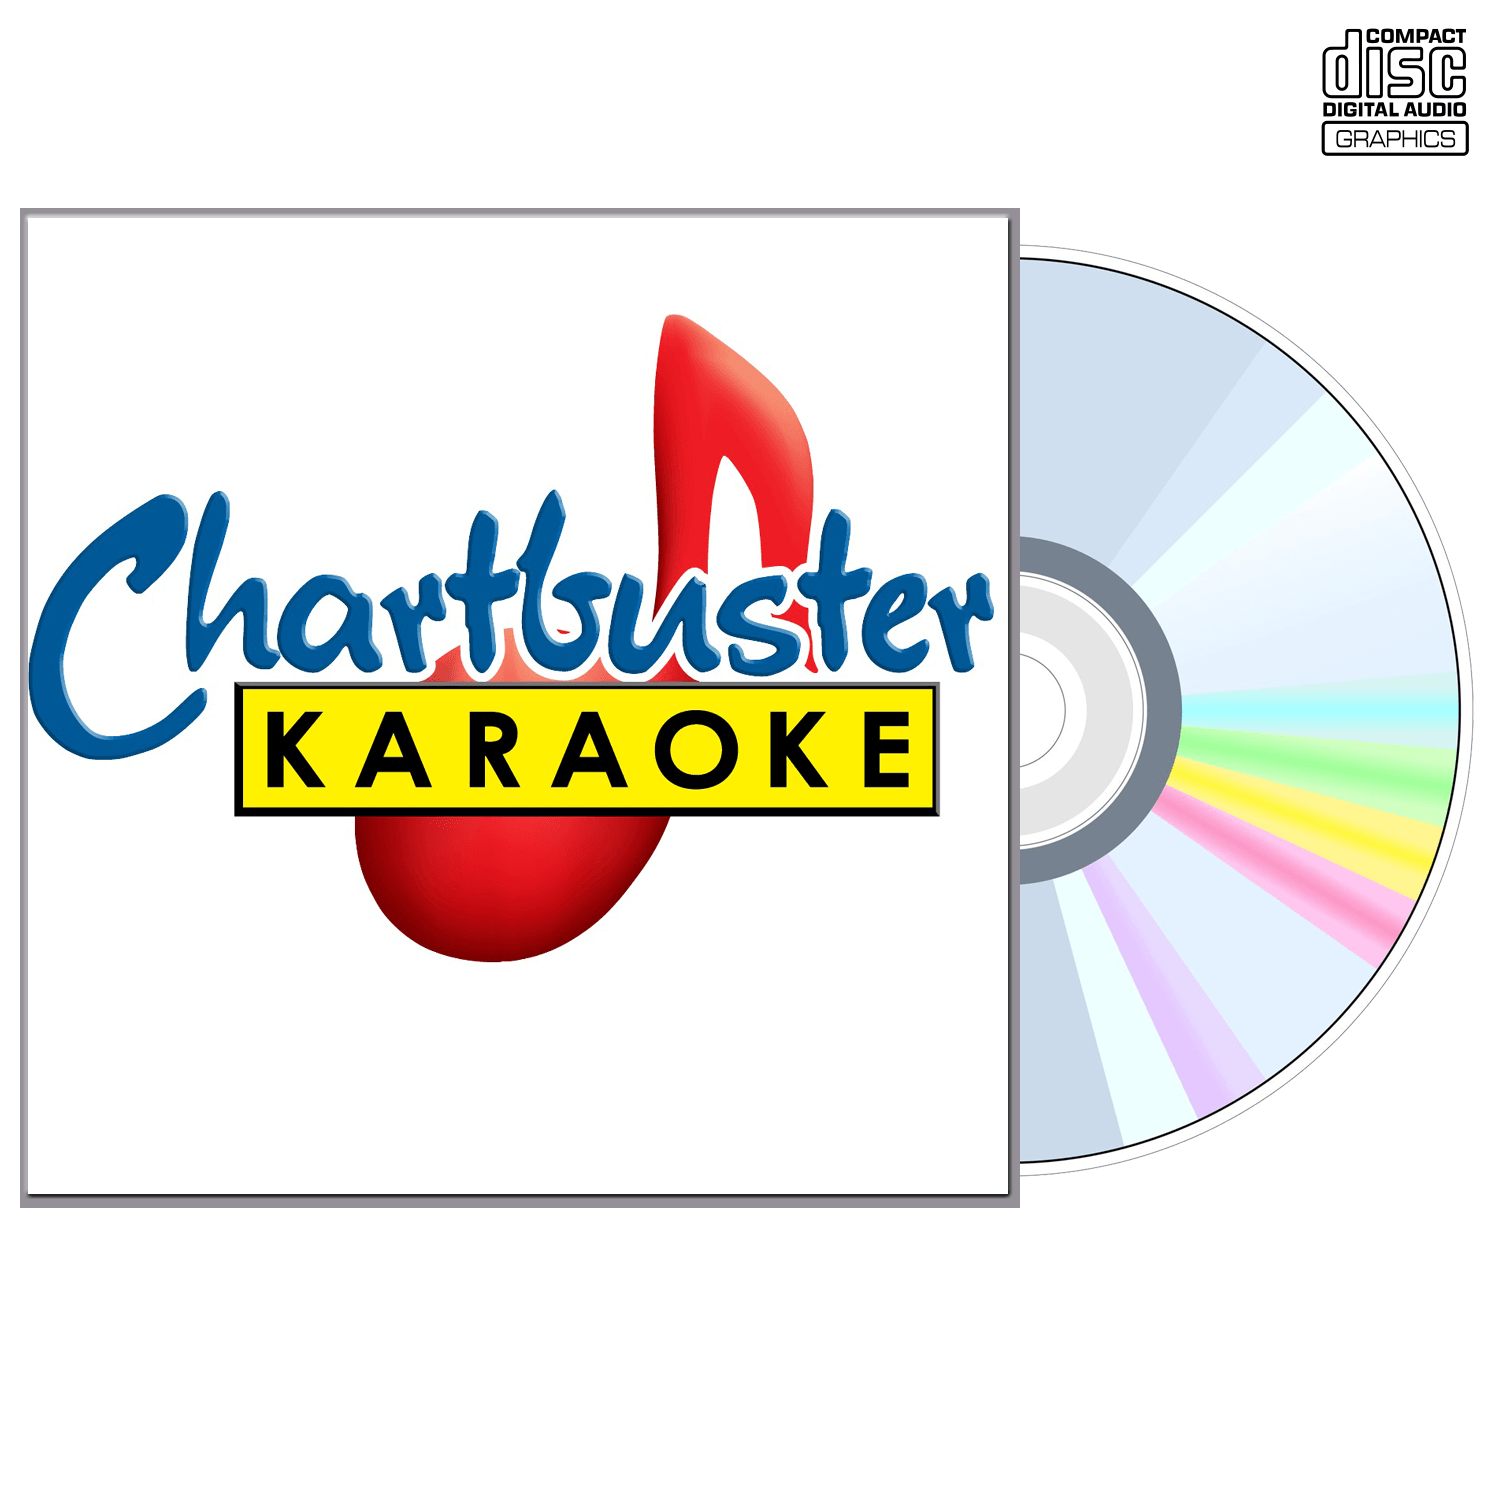 Toby Keith Vol 1 - CD+G - Chartbuster Karaoke - Karaoke Home Entertainment